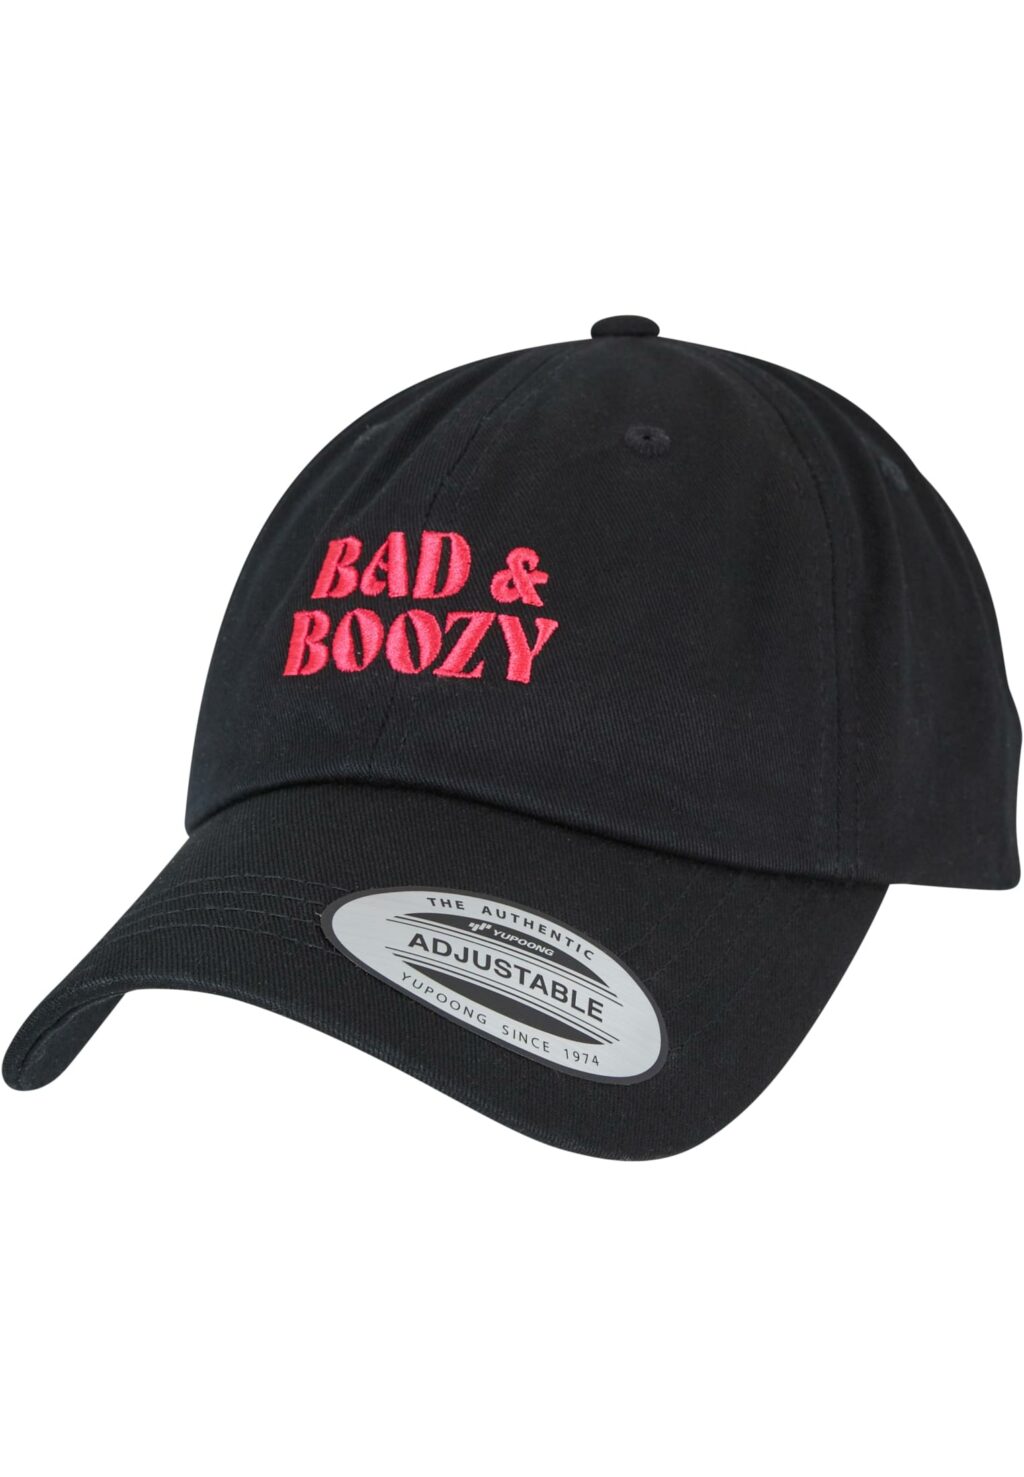 Bad & Boozy Cap black one BE076